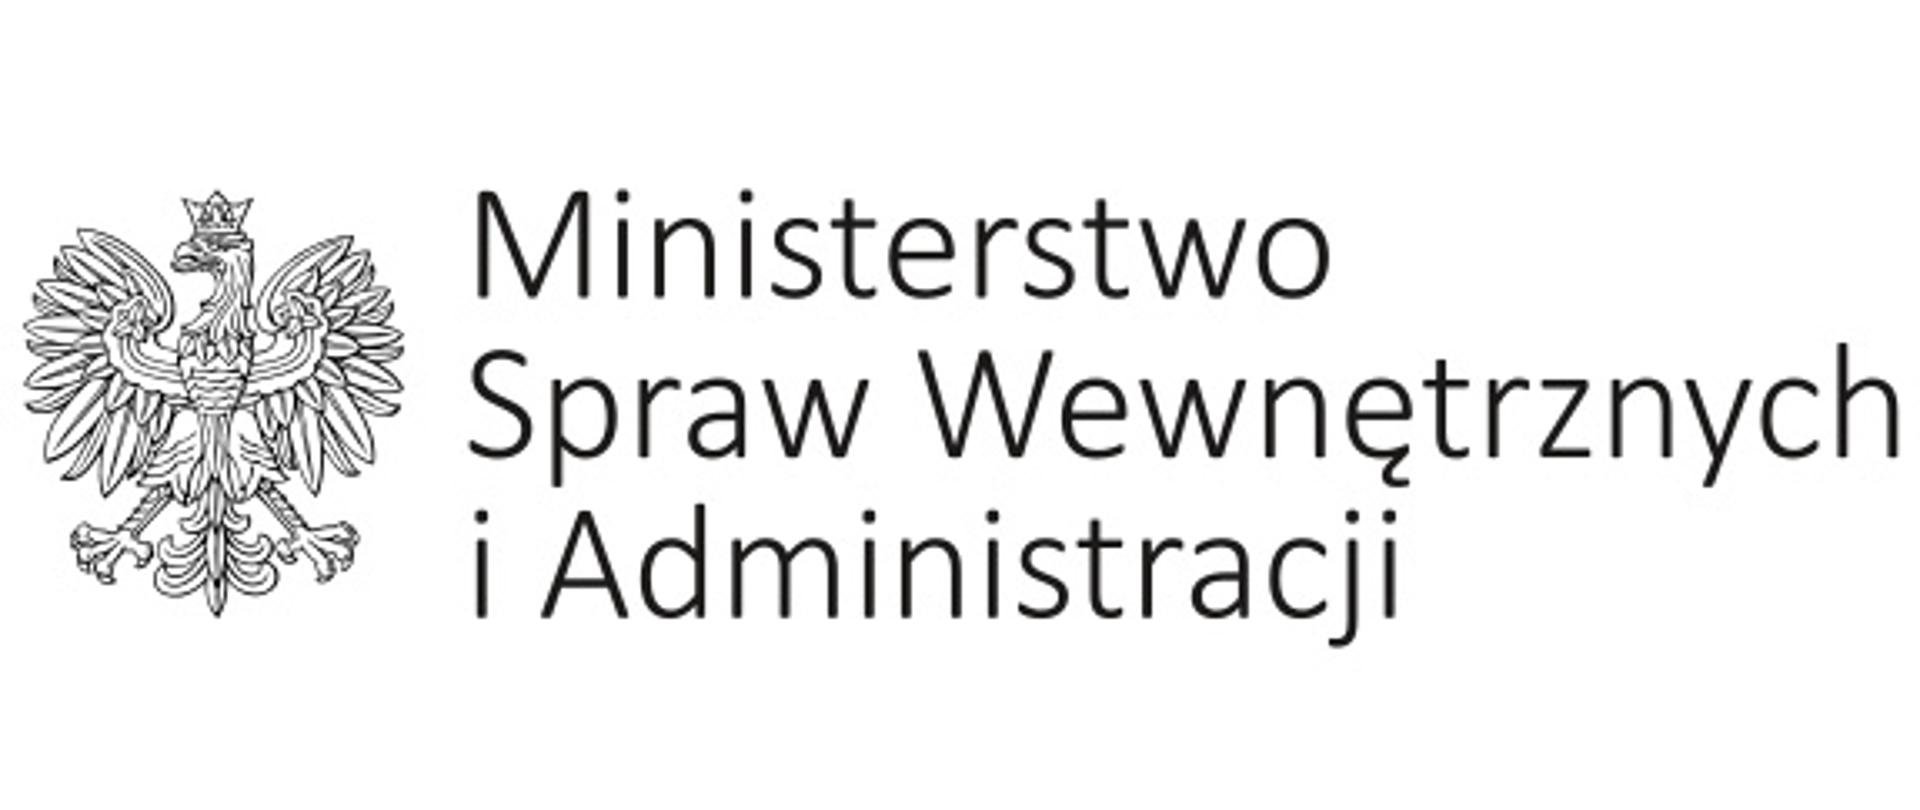 logo MSWiA